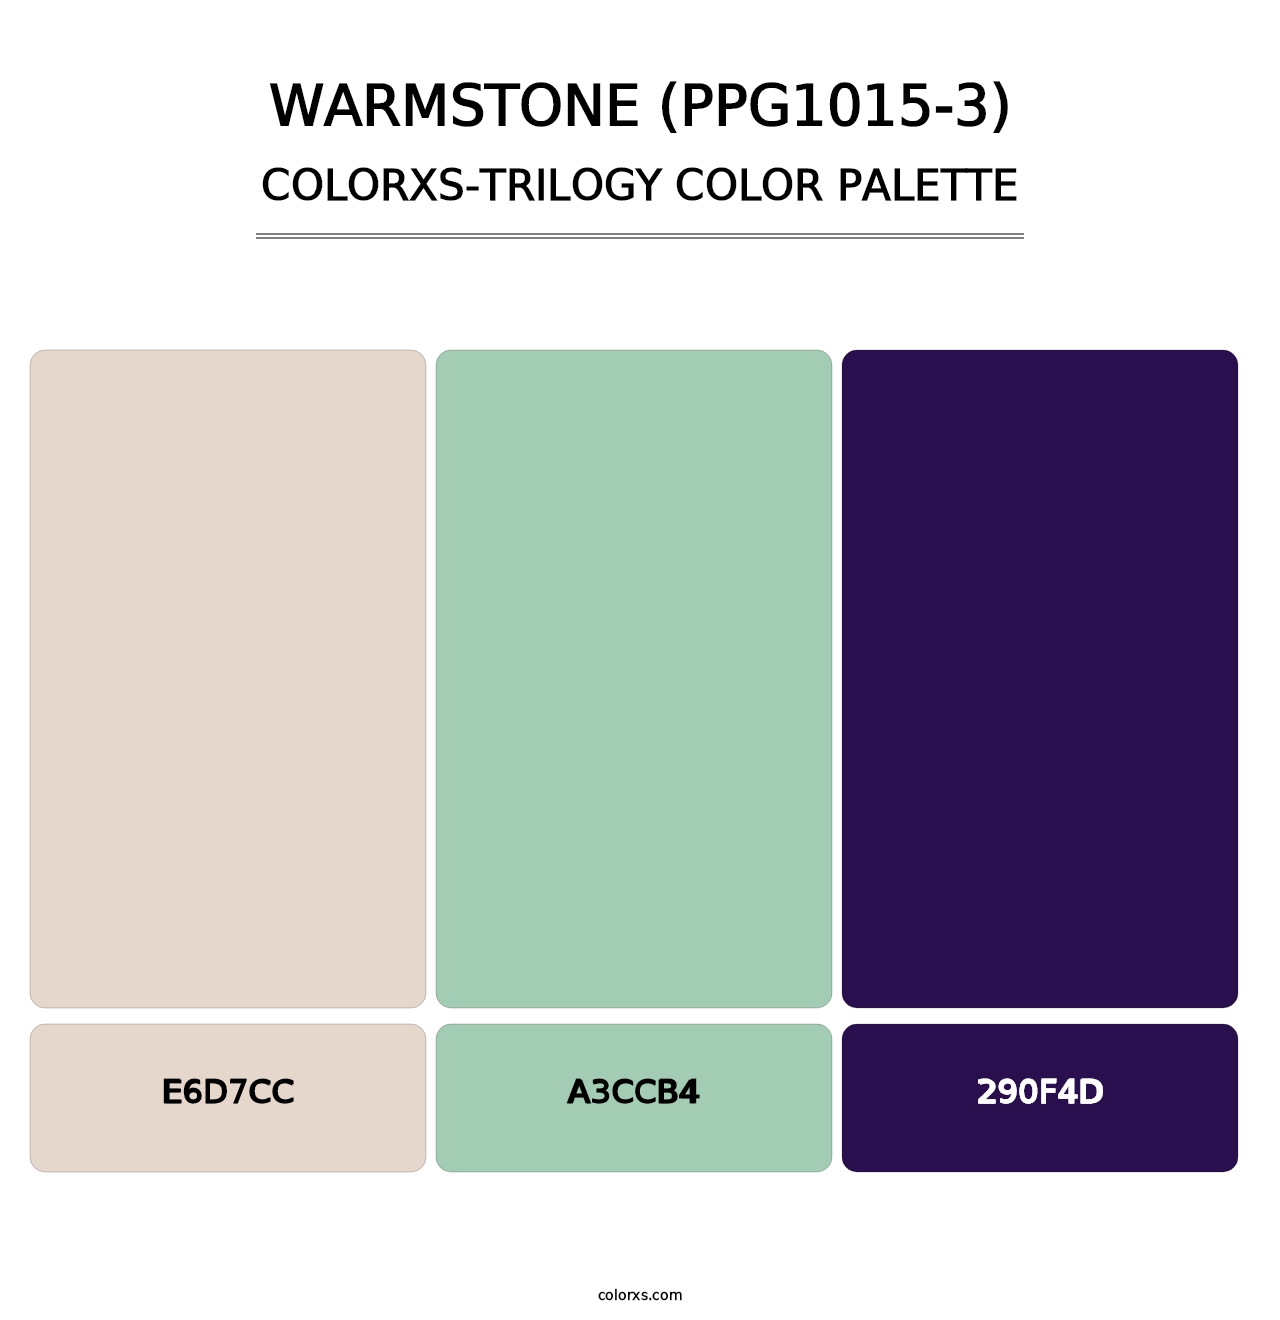 Warmstone (PPG1015-3) - Colorxs Trilogy Palette